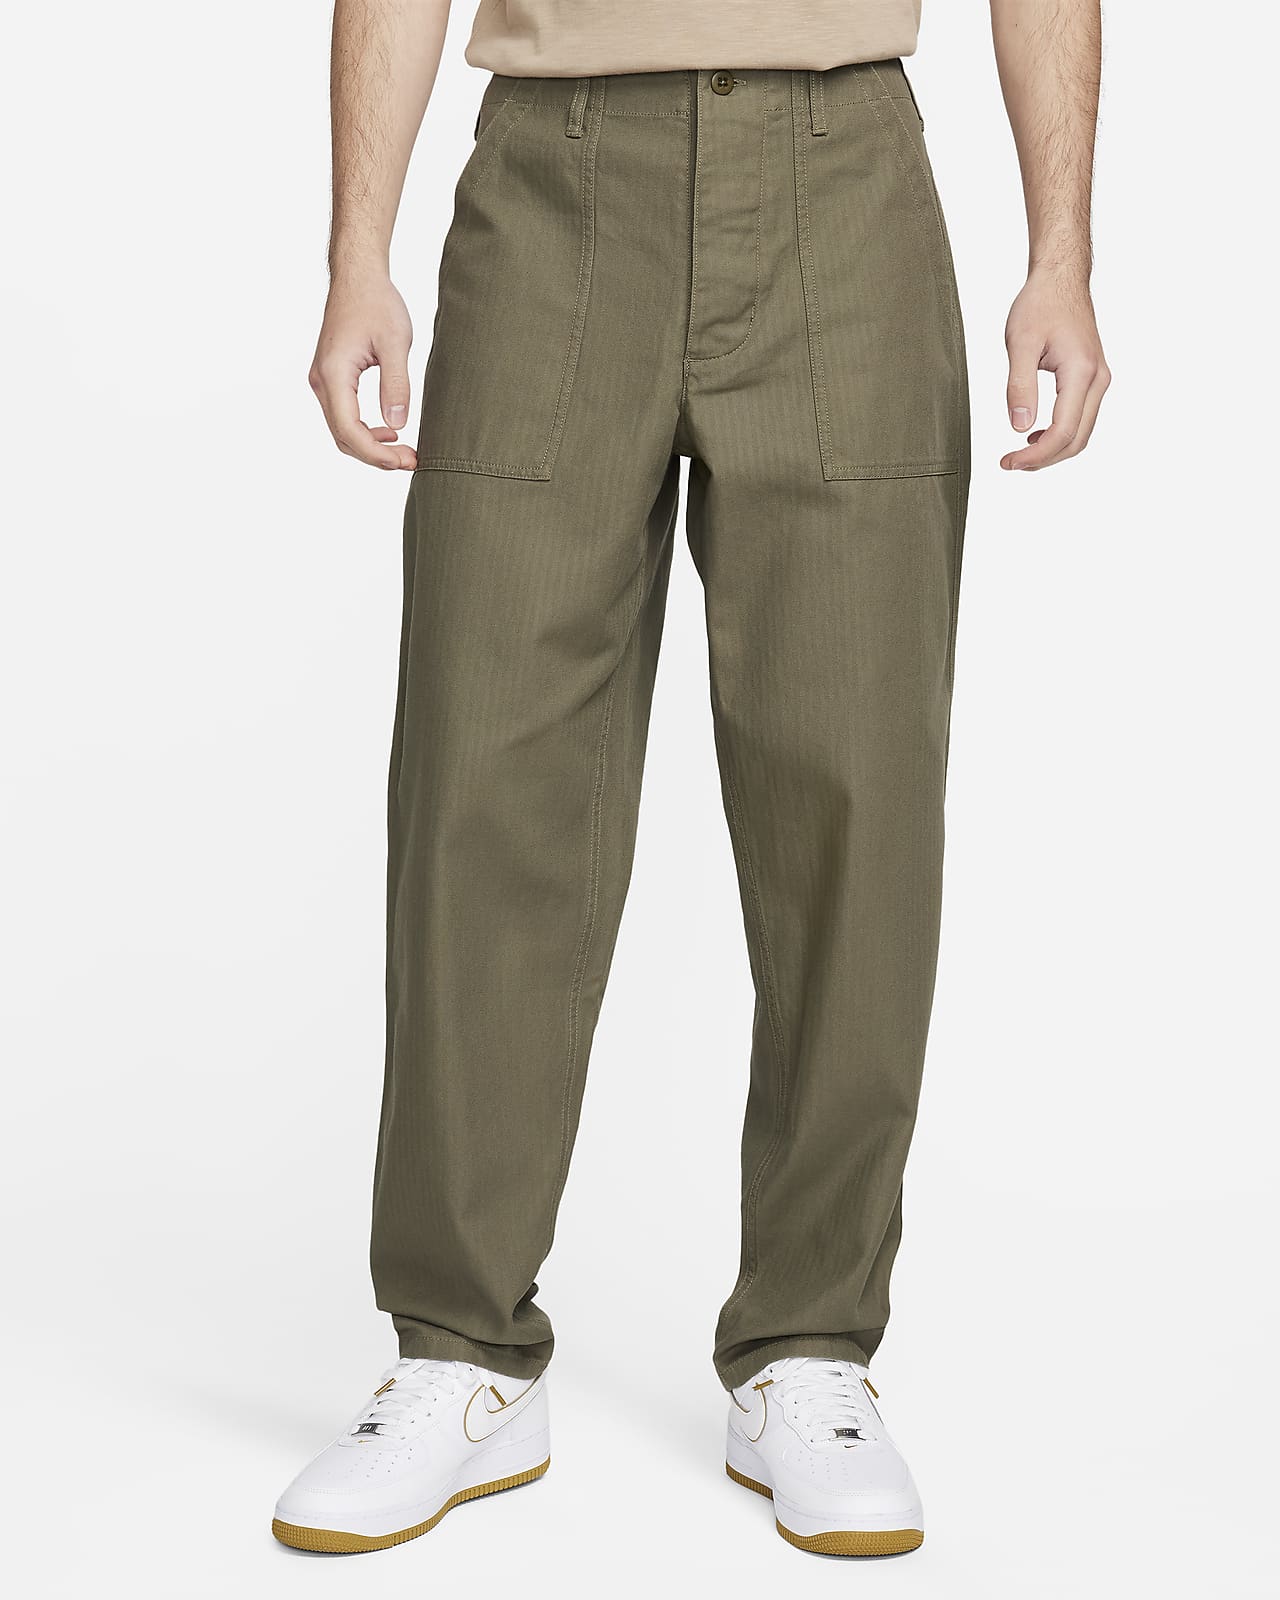 Nike Life Pantalons militars - Home